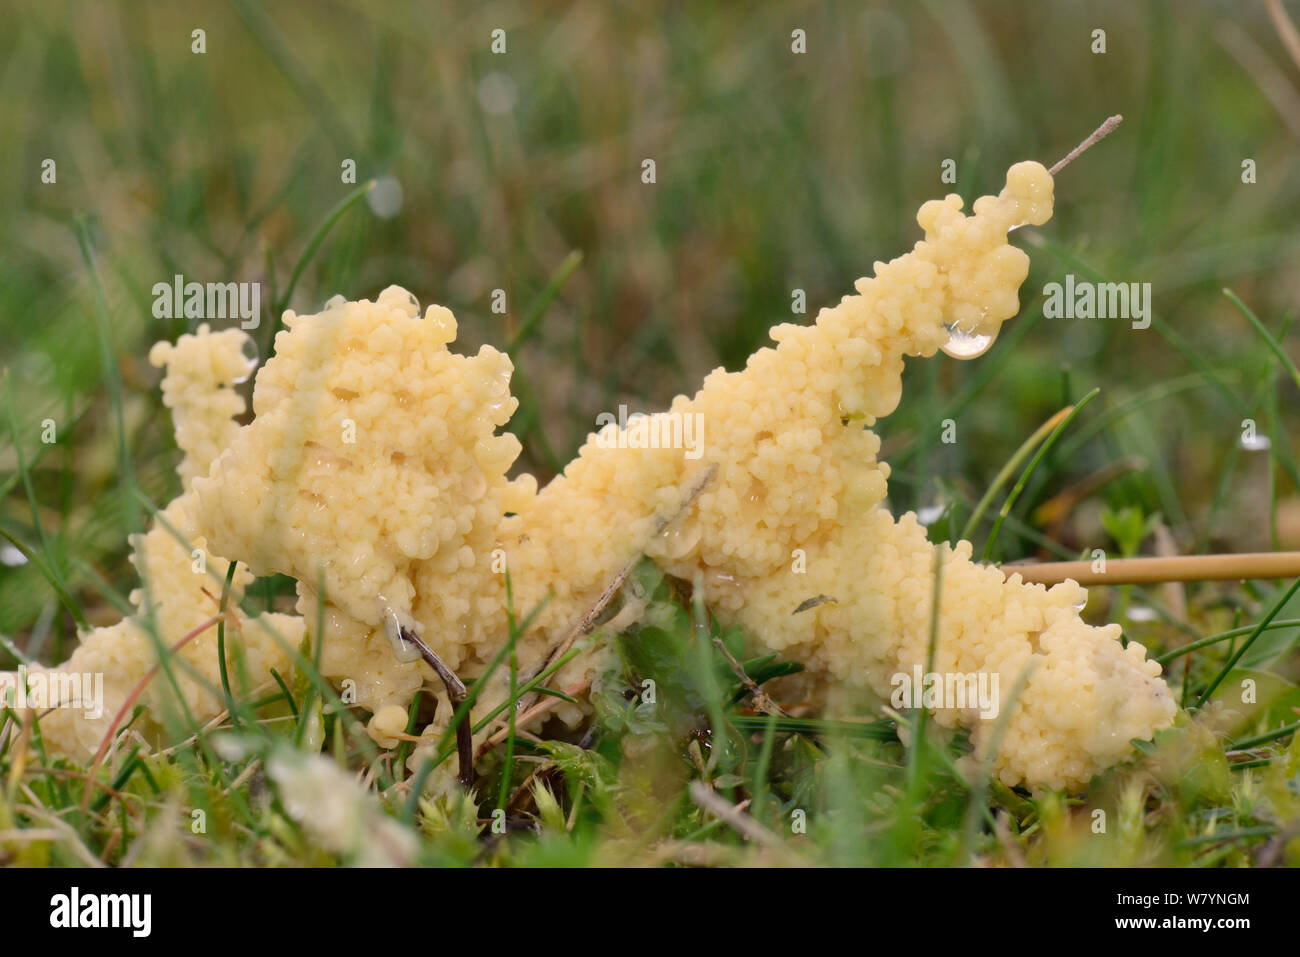 Dog vomit slime mould (Fuligo septica) on stable dune grassland, Whiteford Burrows, Gower Peninsula, Wales, UK, October. Stock Photo